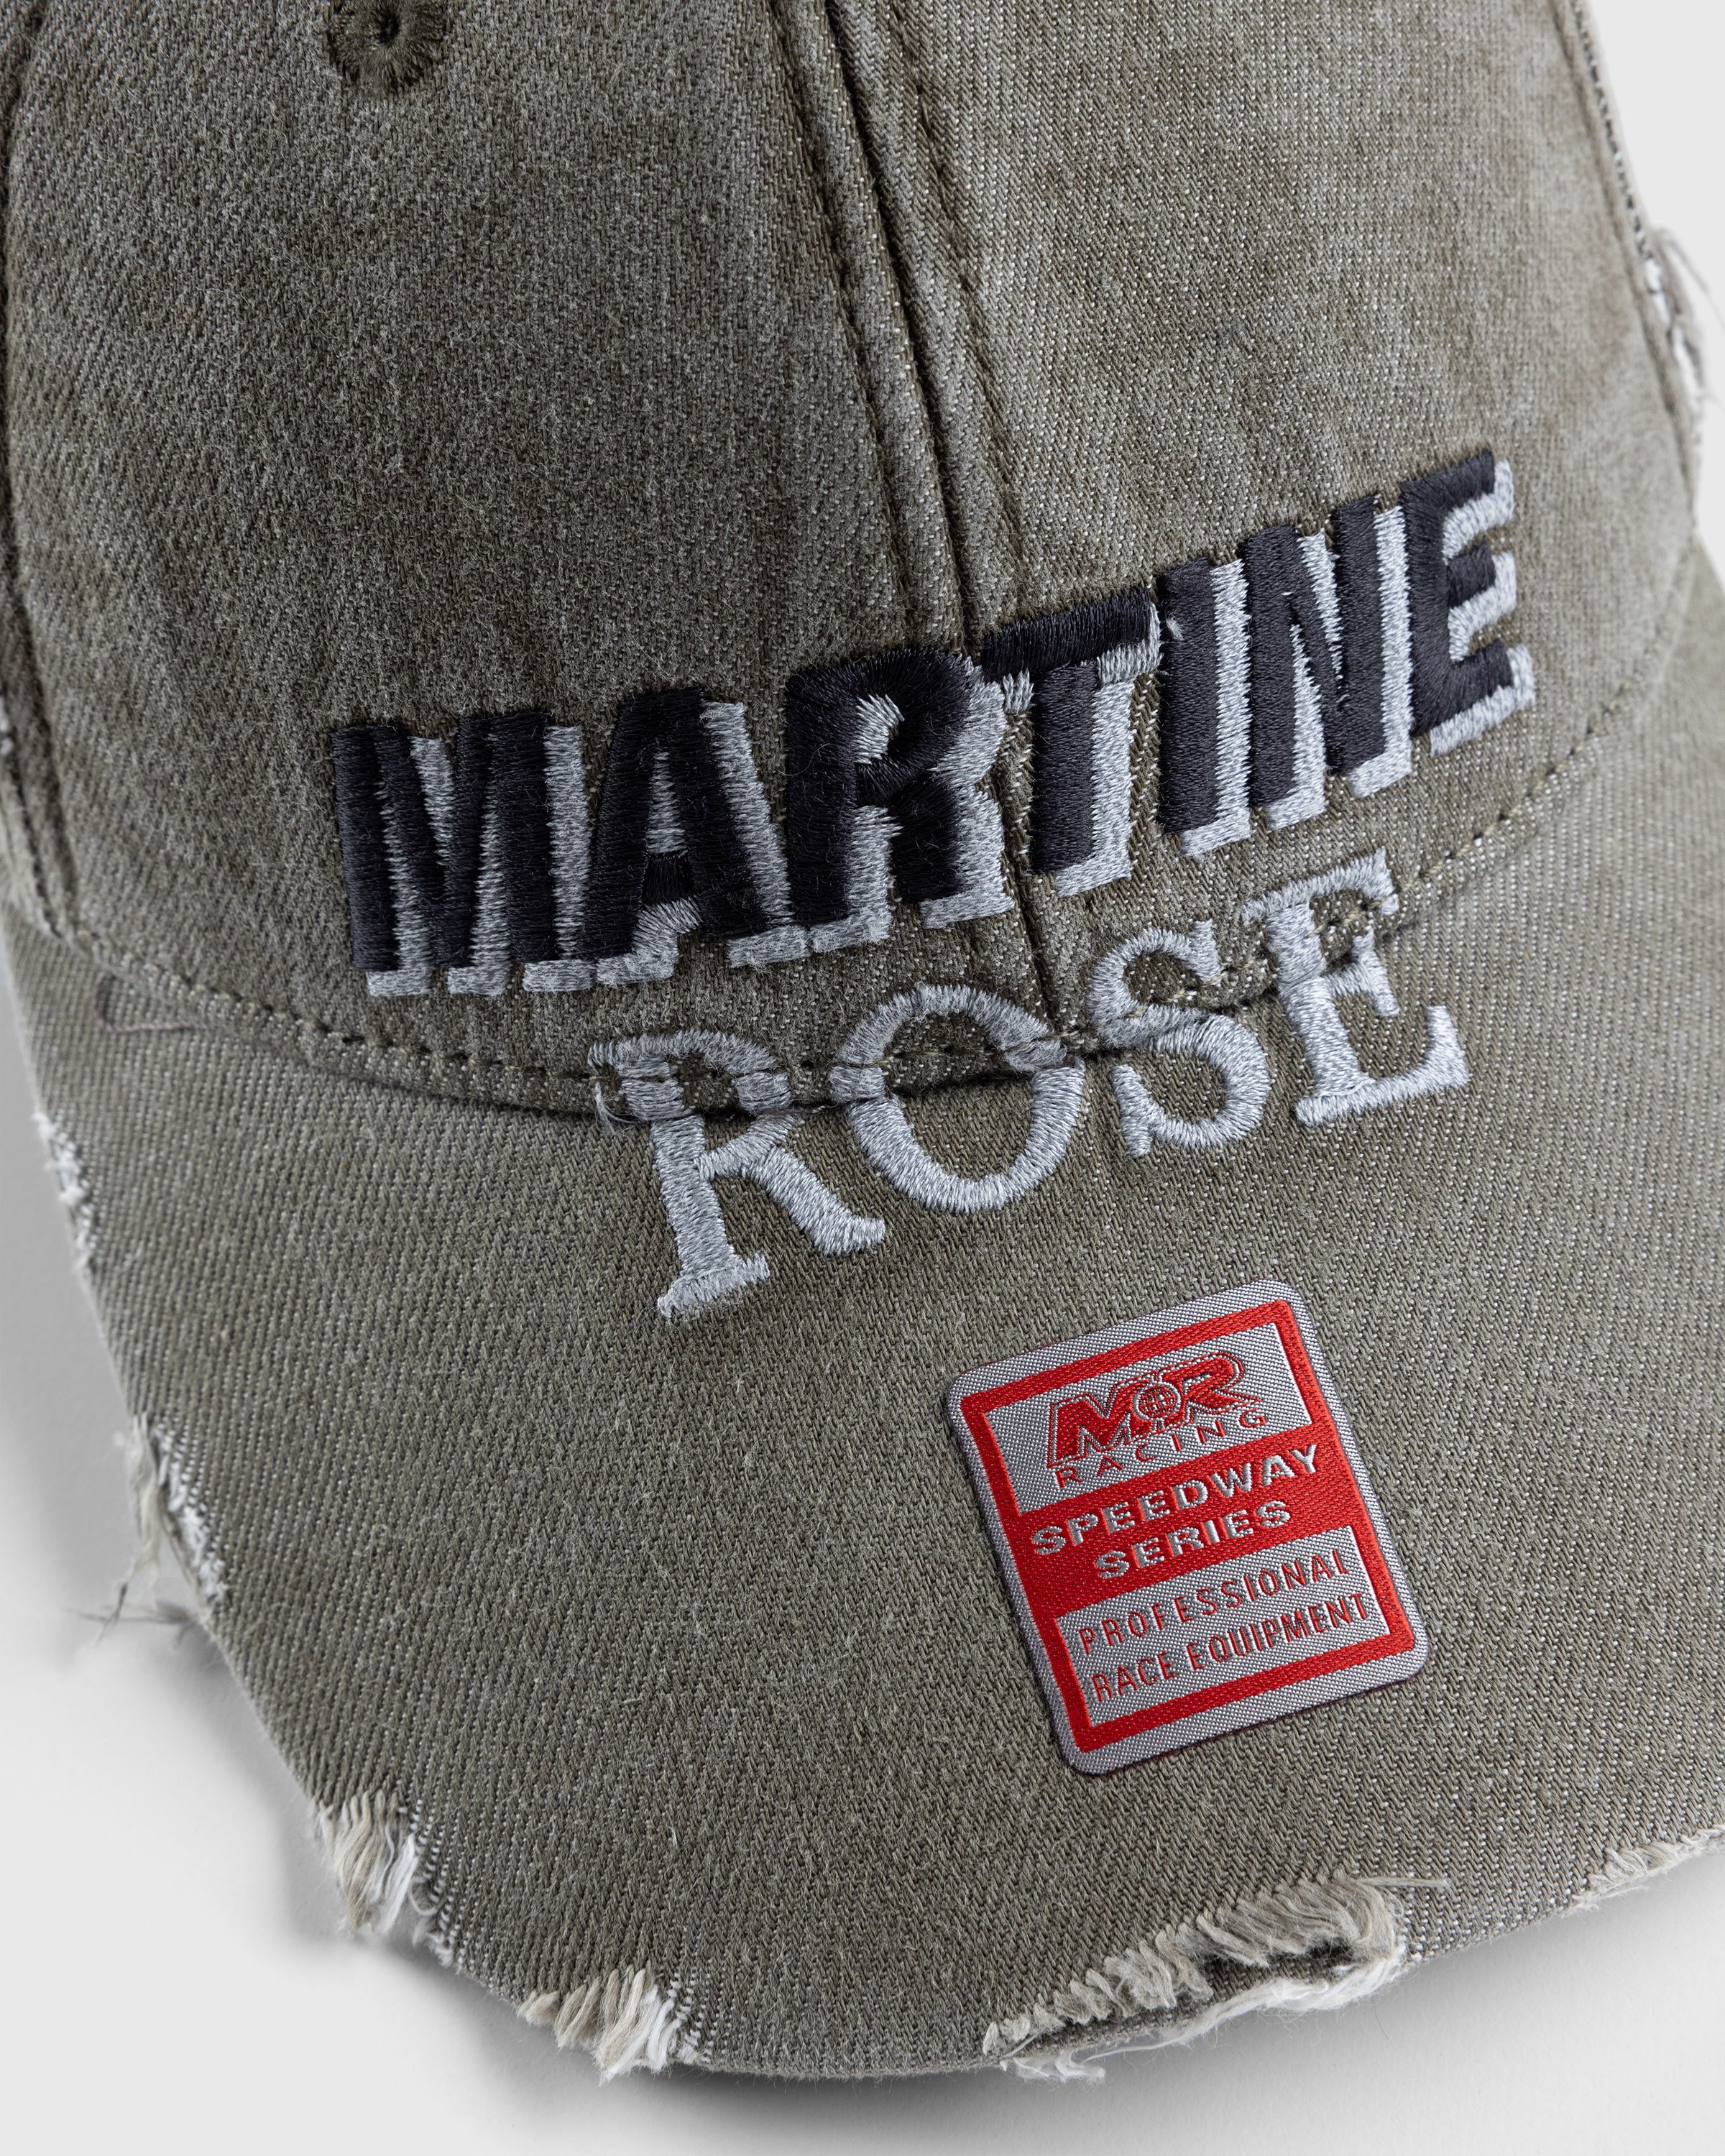 Martine Rose – Rolled Cap Green | Highsnobiety Shop